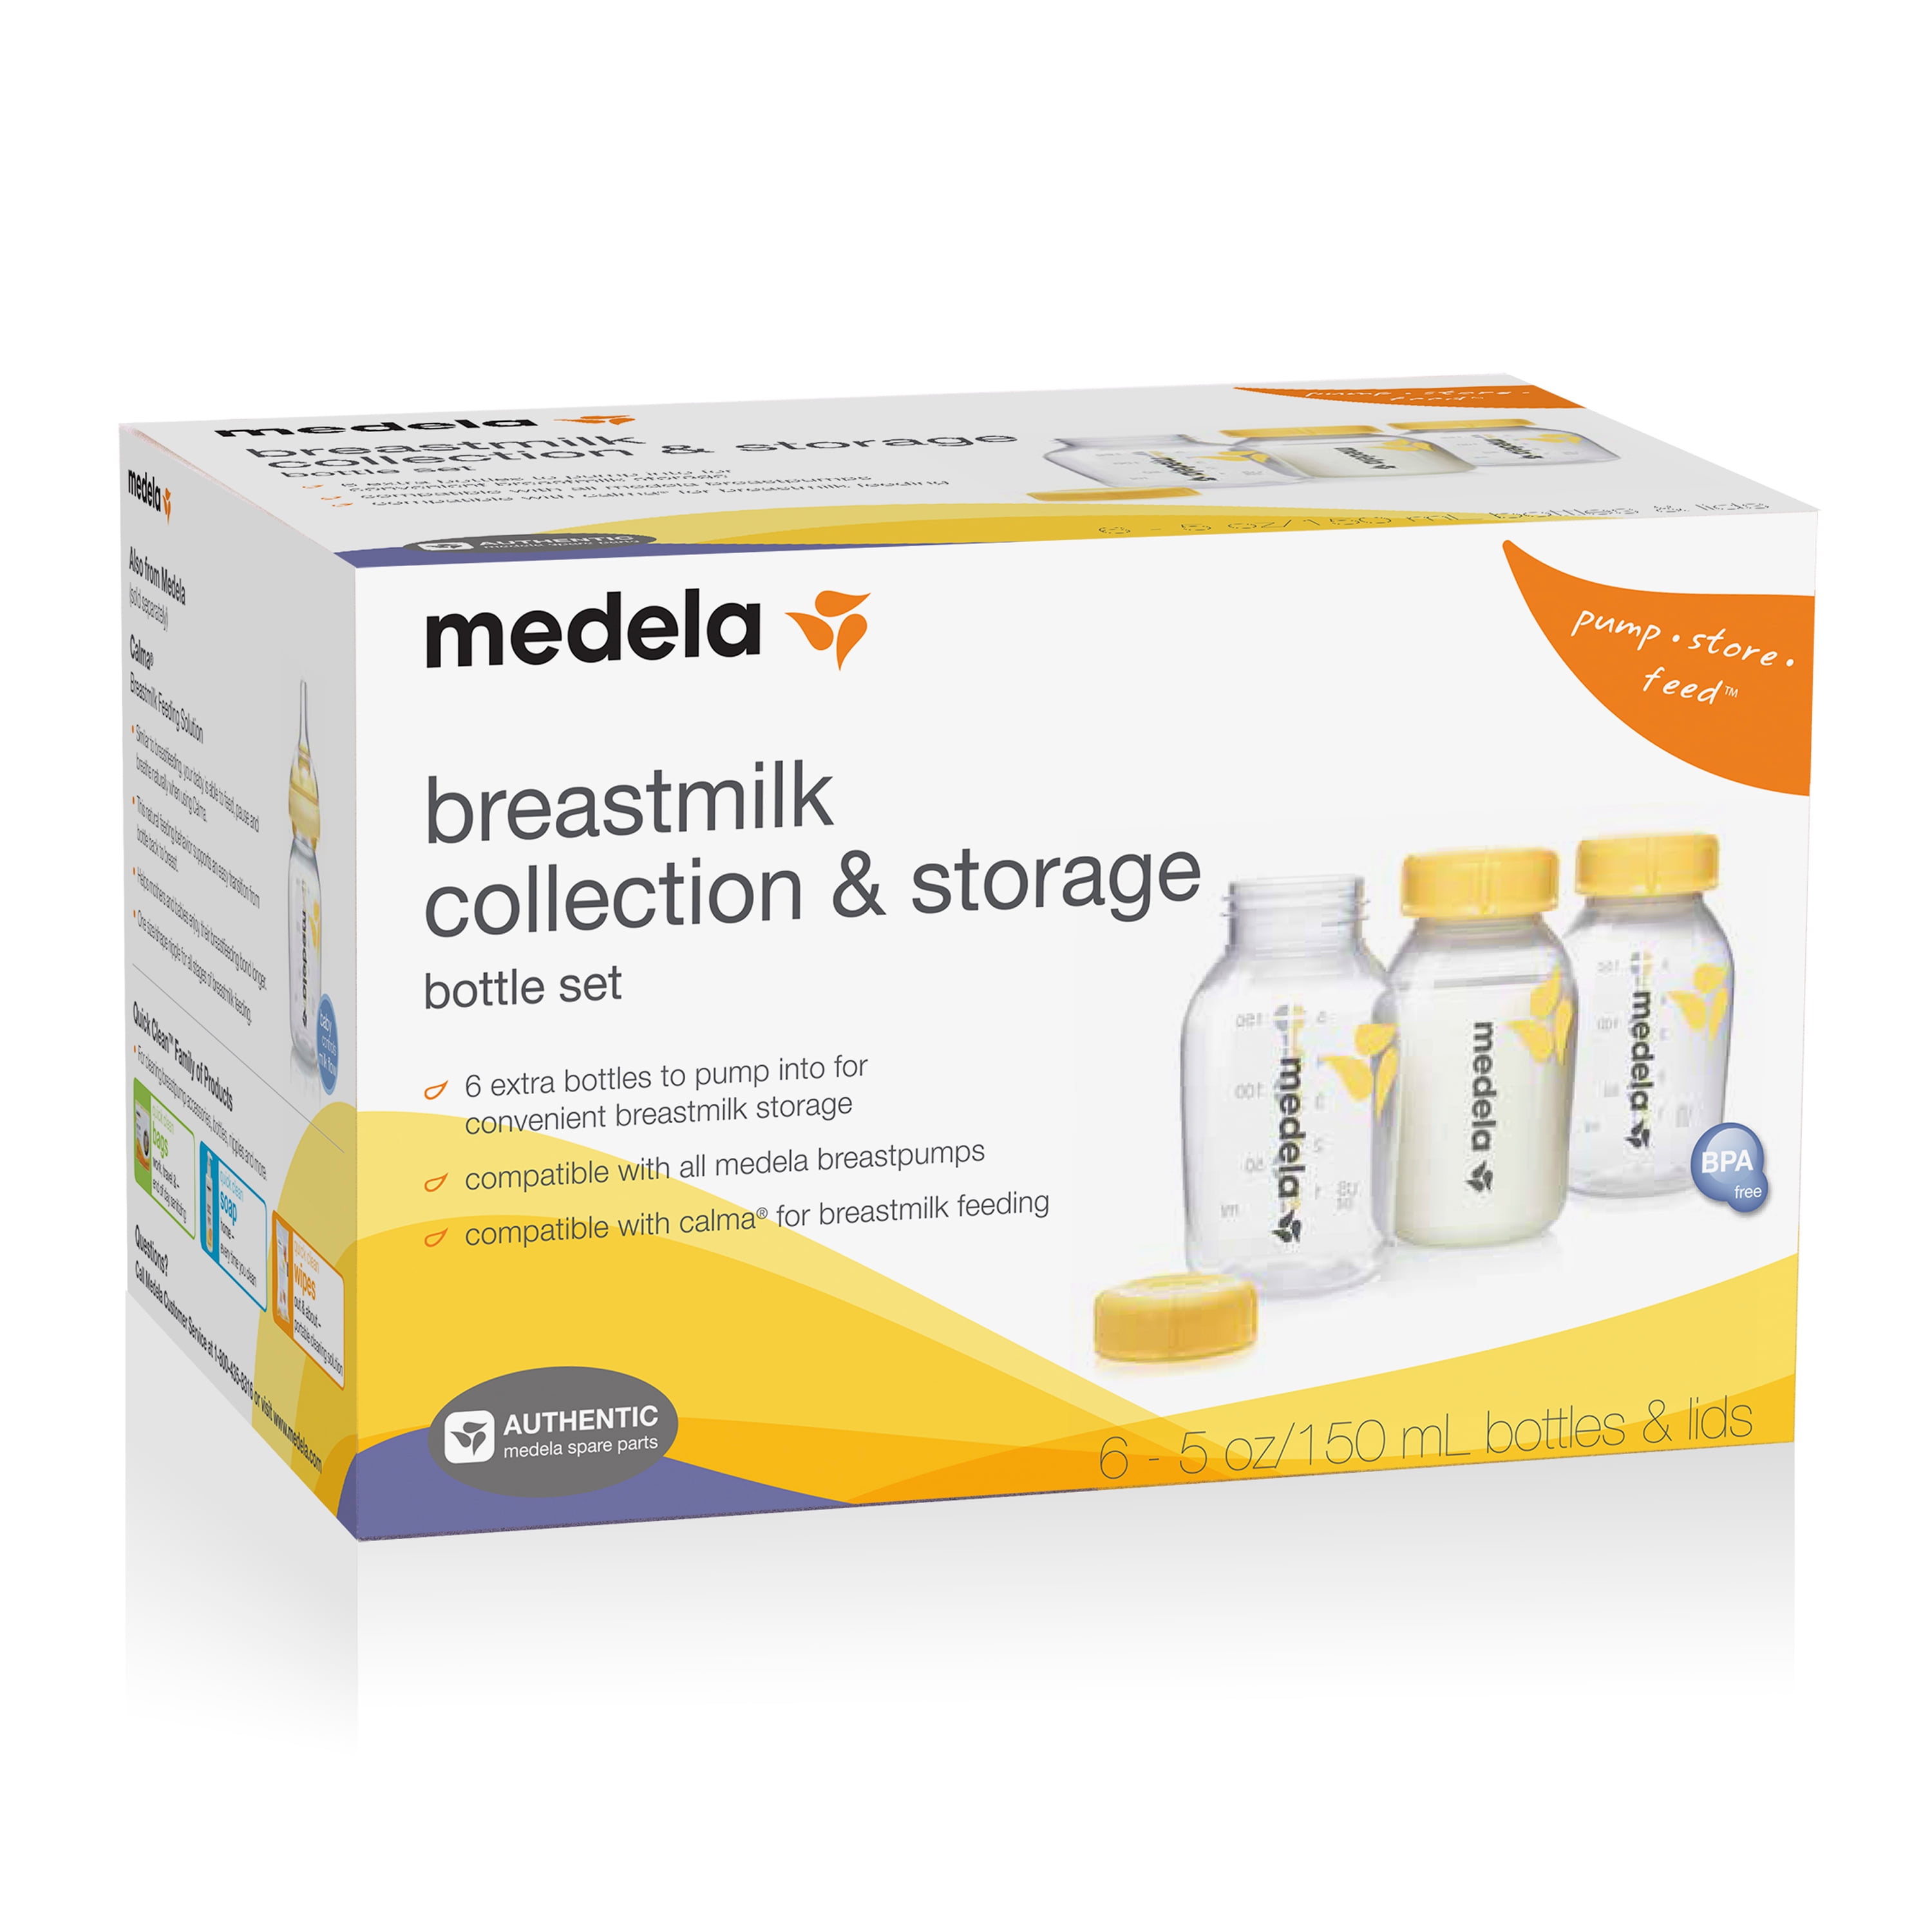 New Sterifeed Collection & Storage Breastmilk Bottles Fits Medela